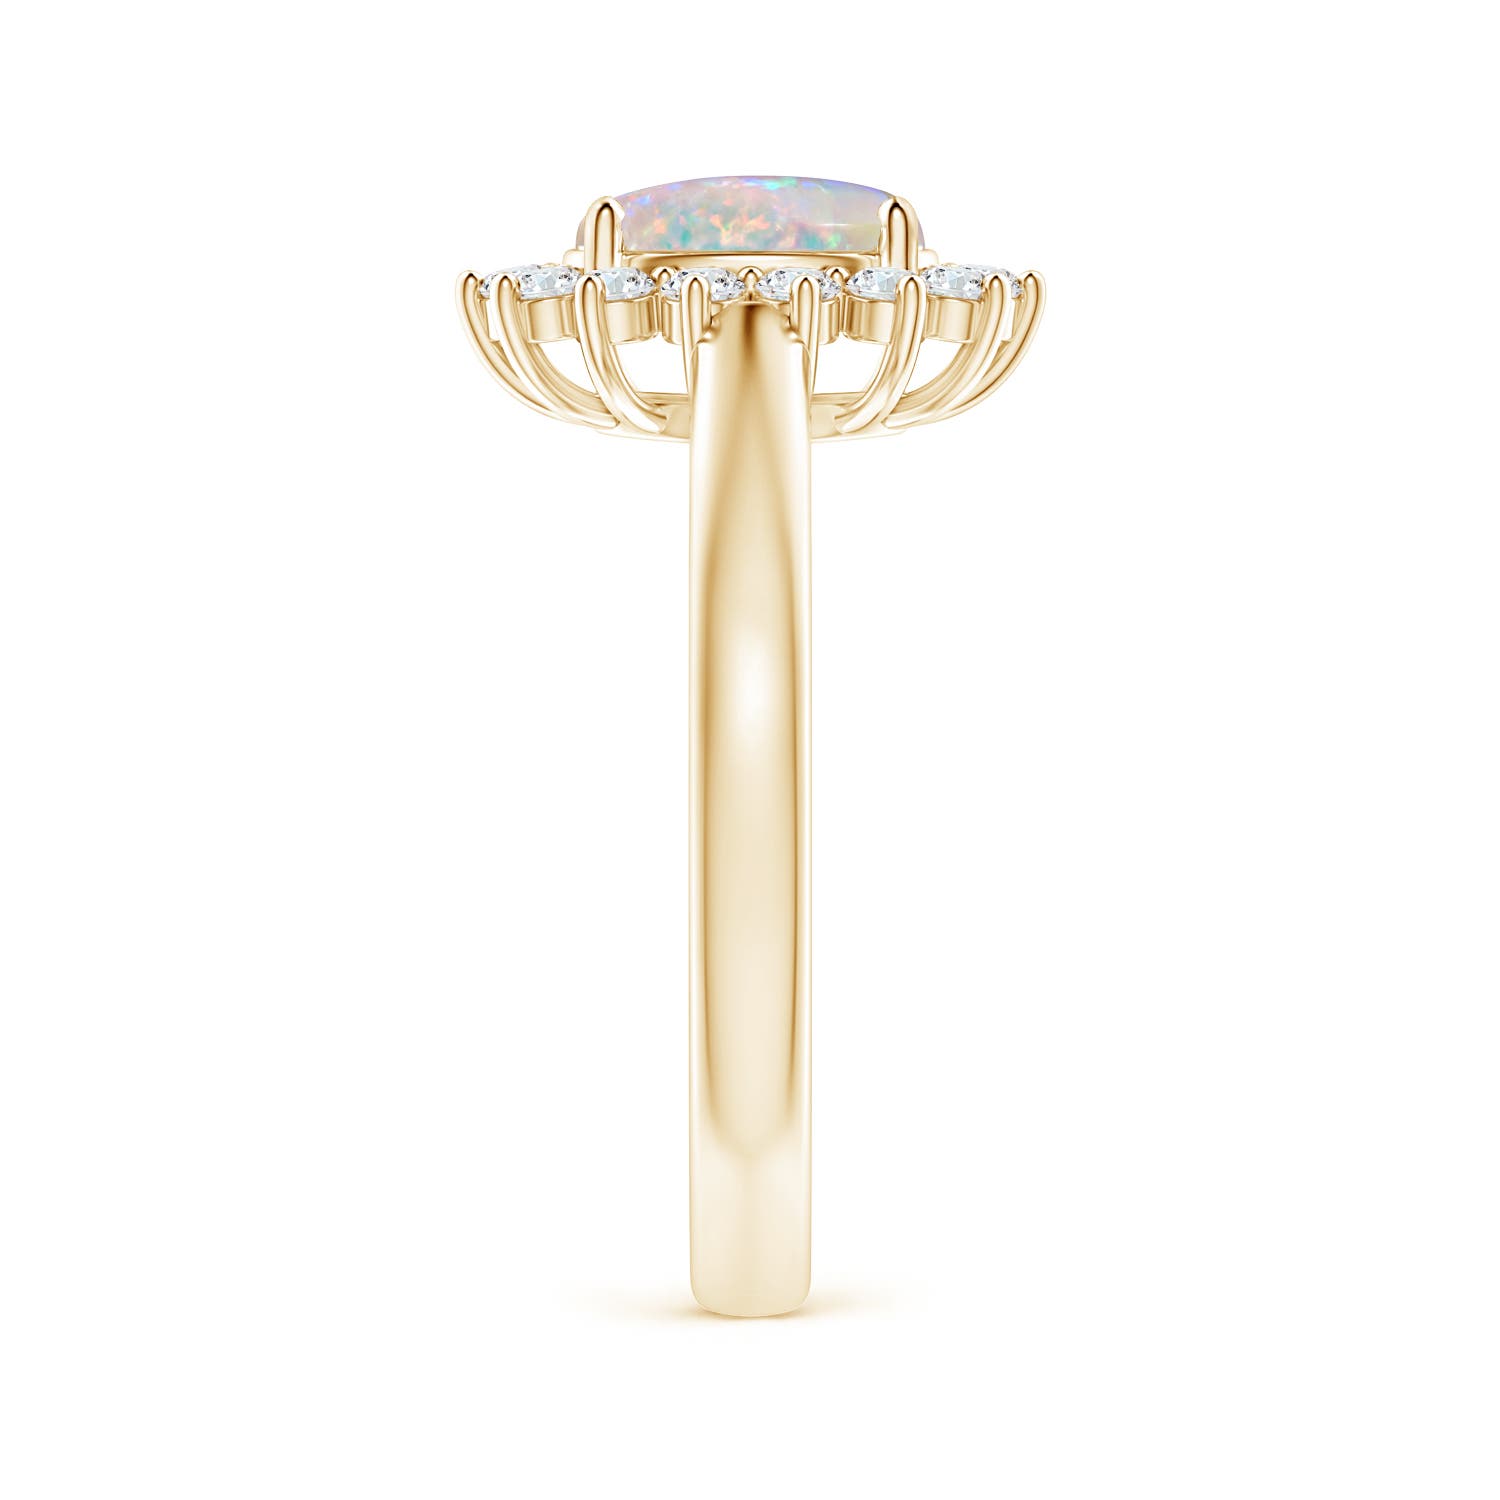 Princess Diana Inspired Opal Ring with Diamond Halo